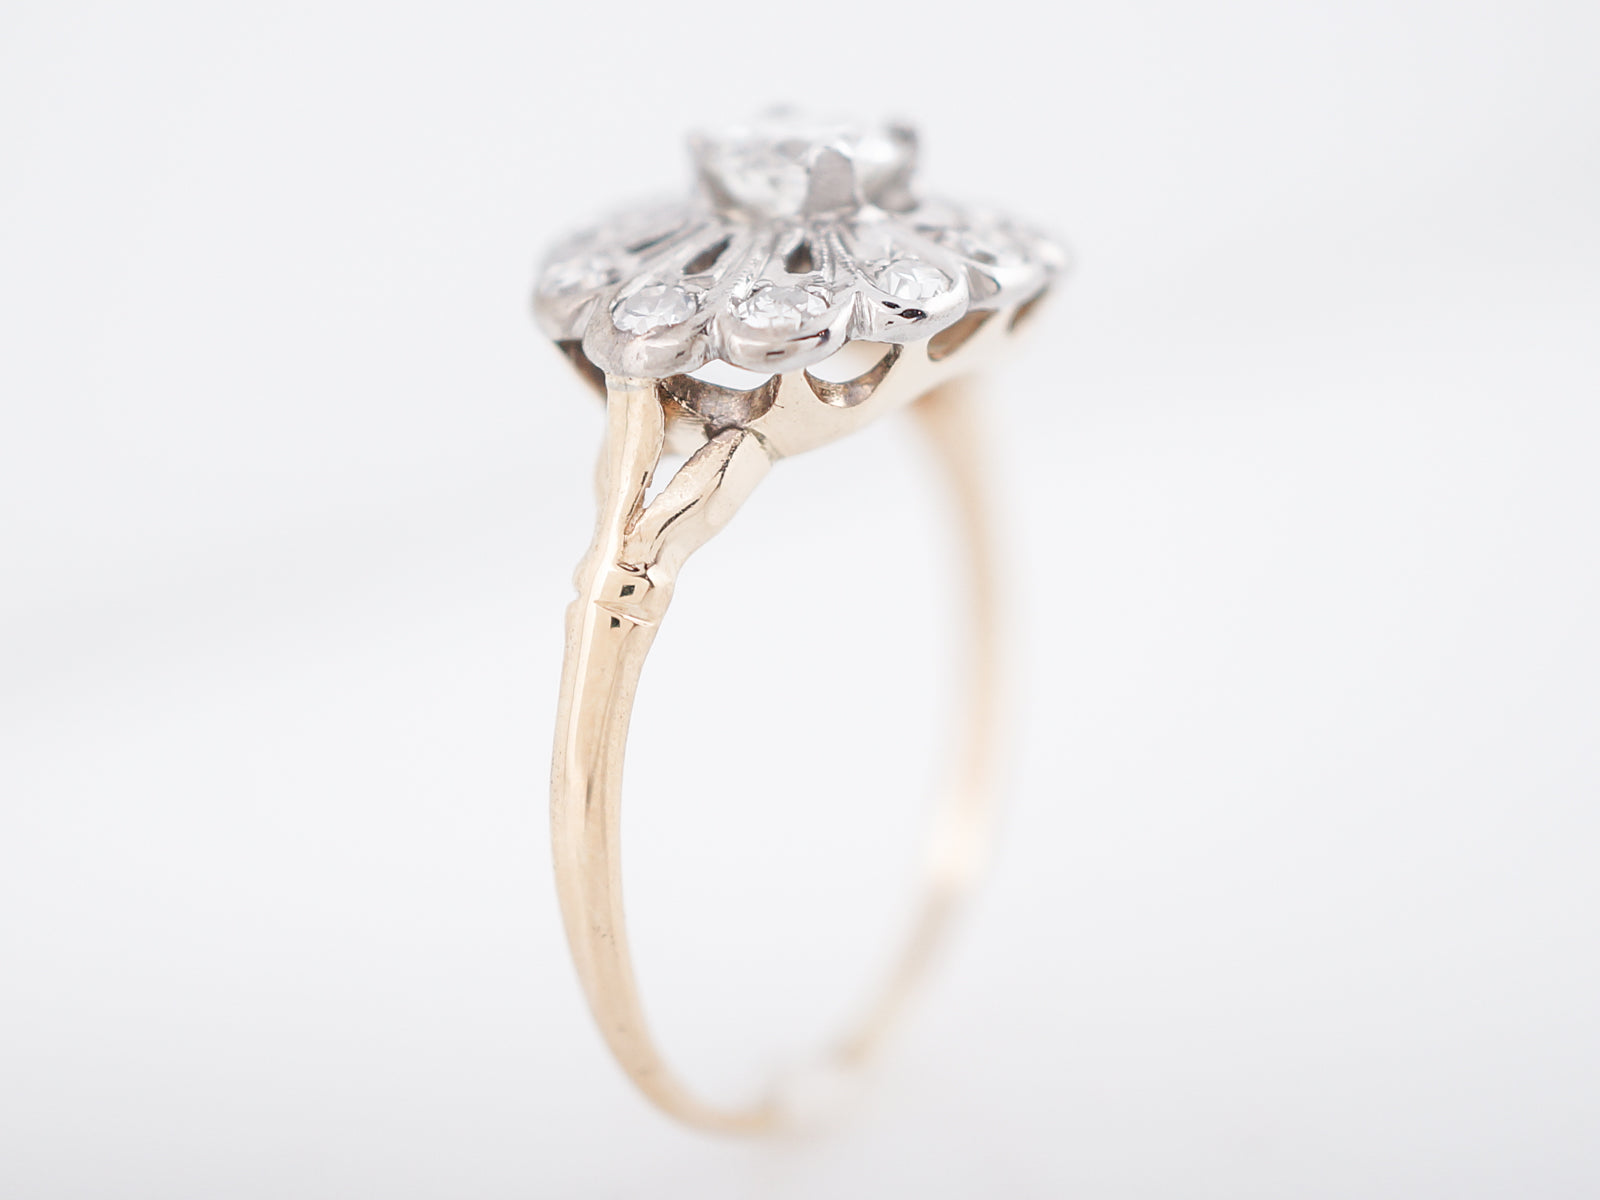 Antique Engagement Ring Retro .33 Round Brilliant Cut Diamond in 14k White & Yellow Gold